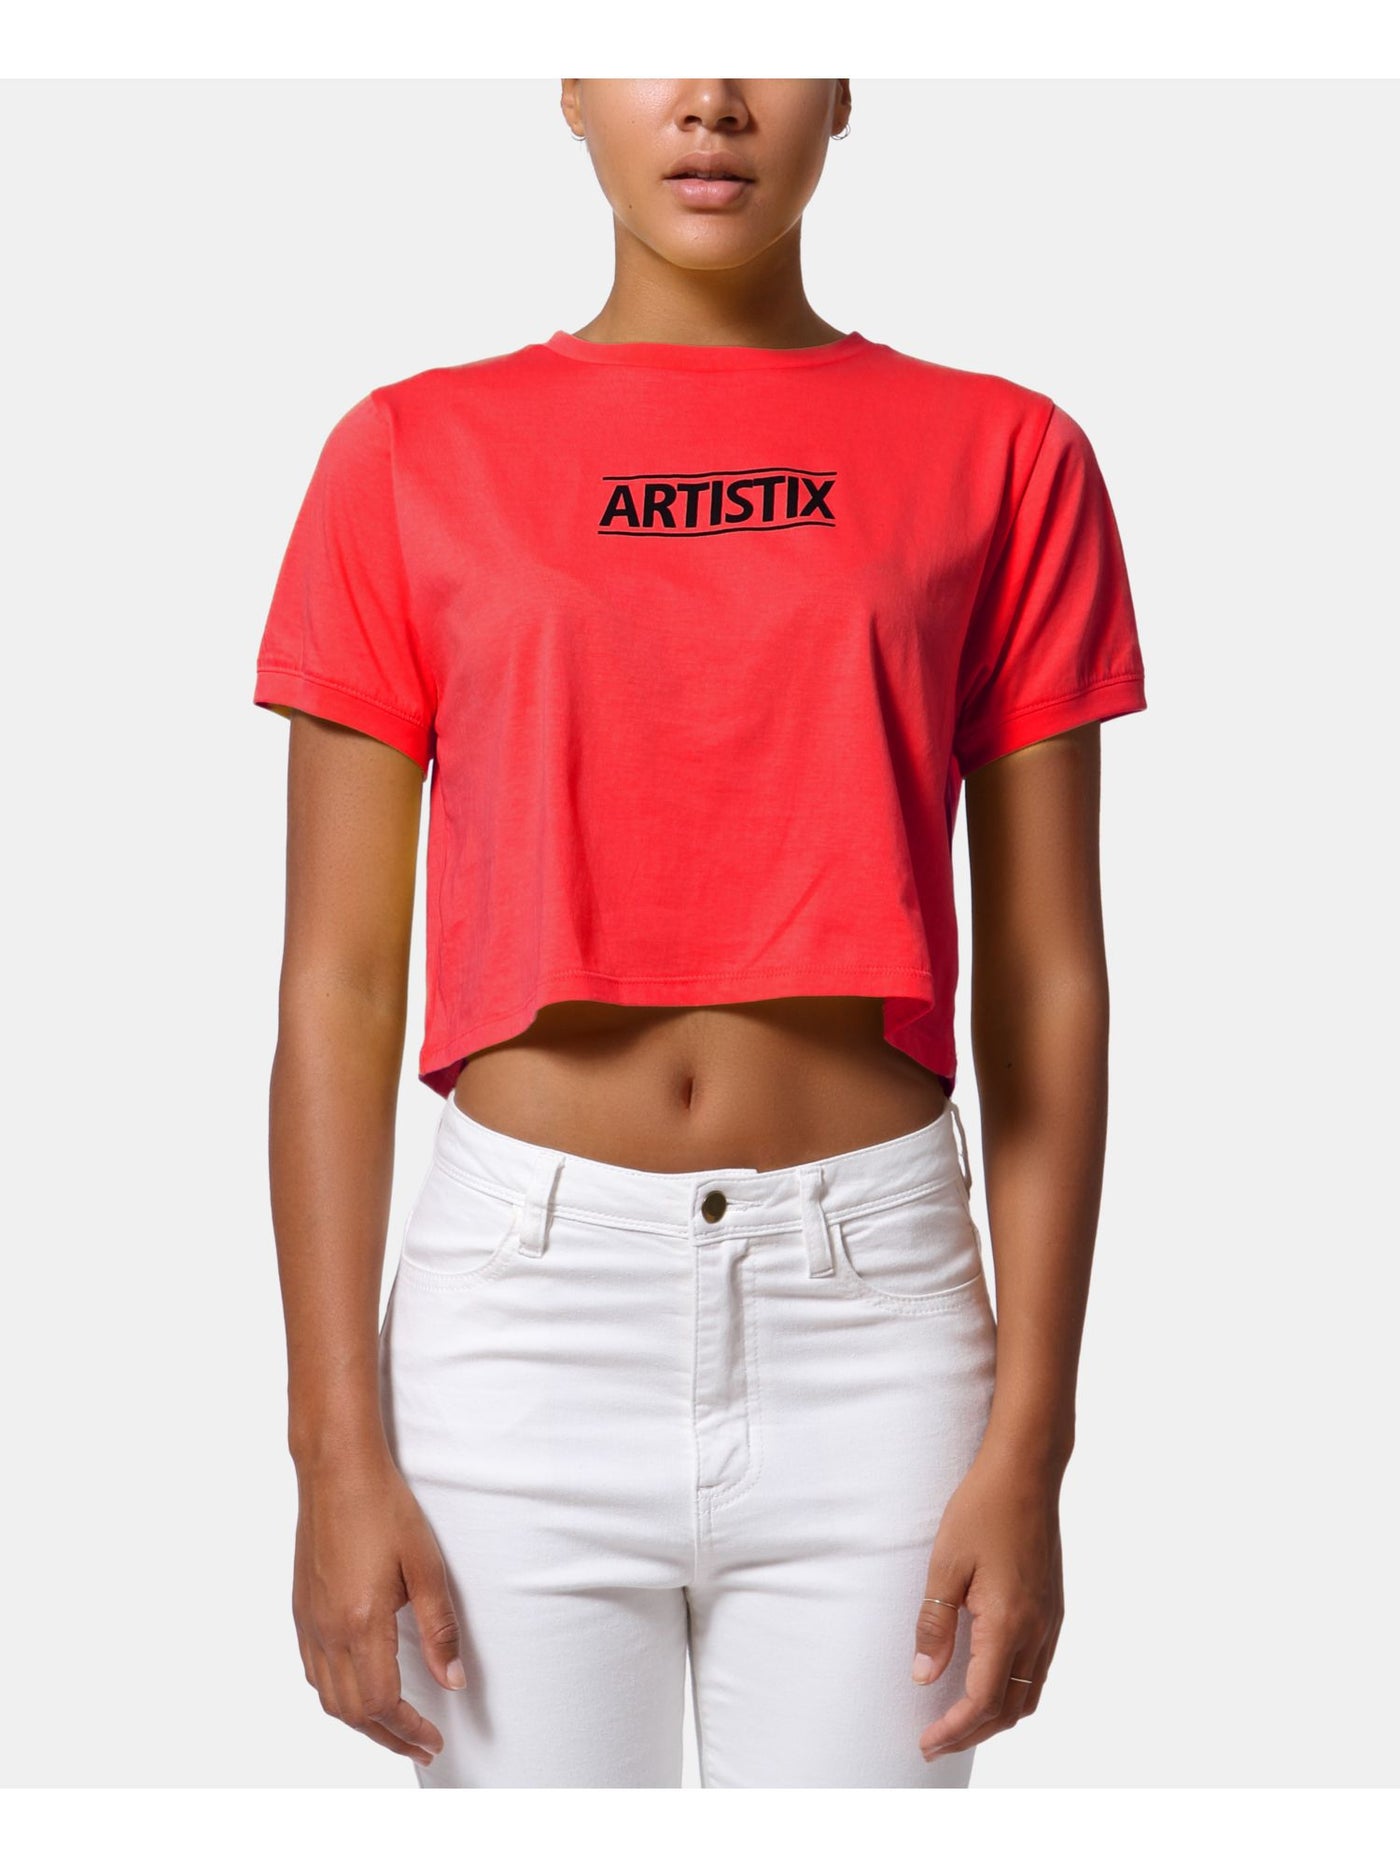 ARTISTIX Womens Short Sleeve Jewel Neck Crop Top